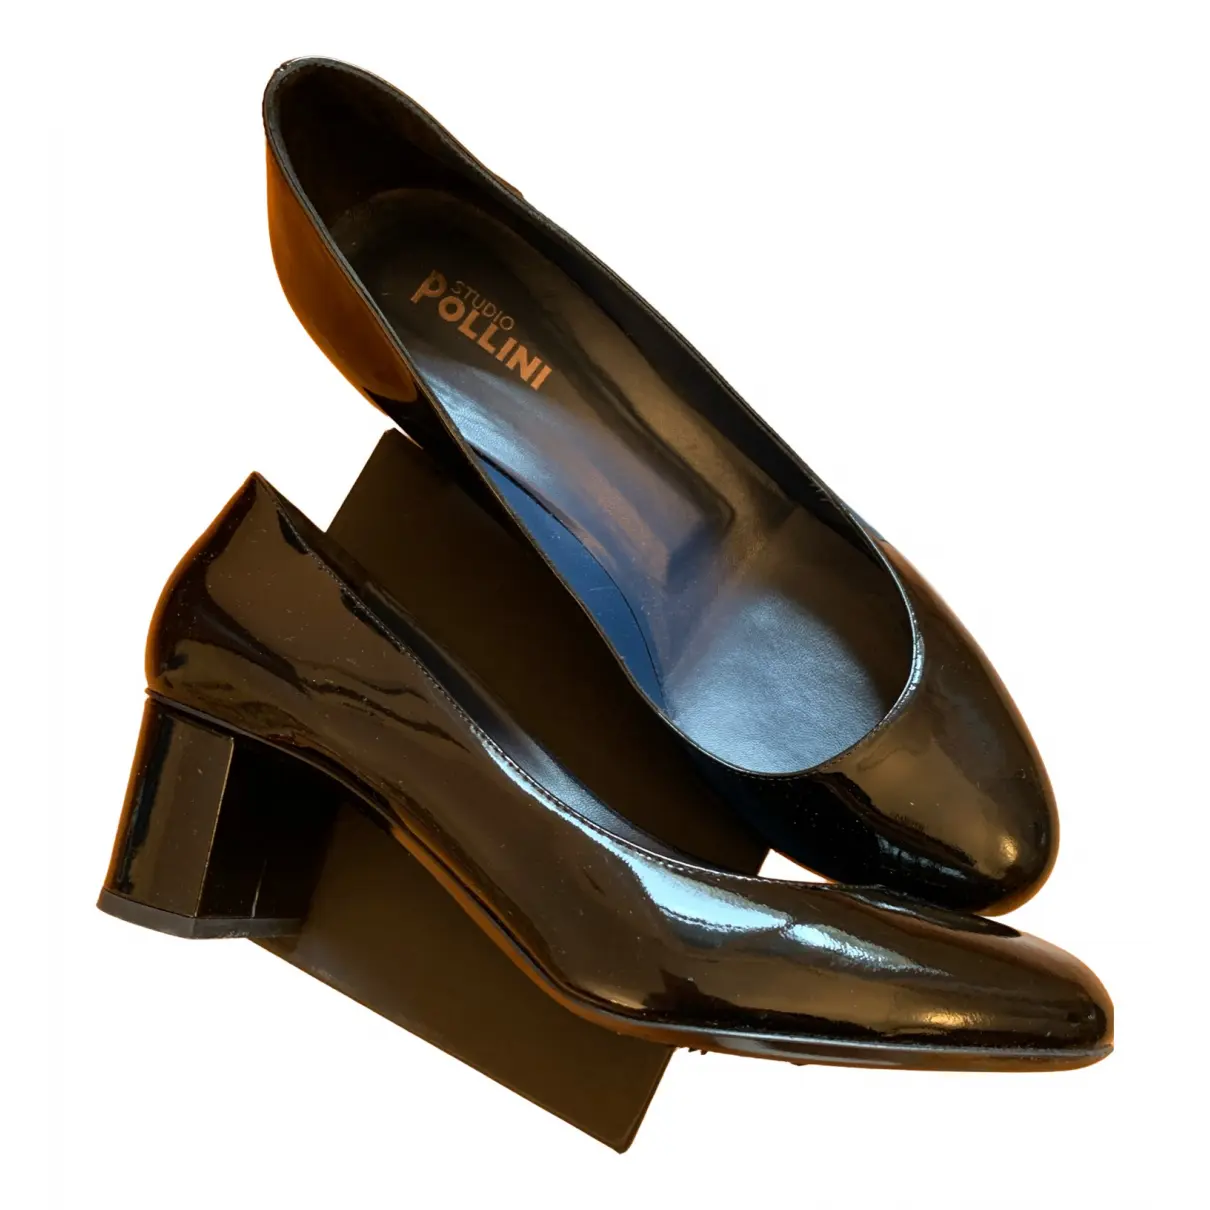 Patent leather heels Pollini